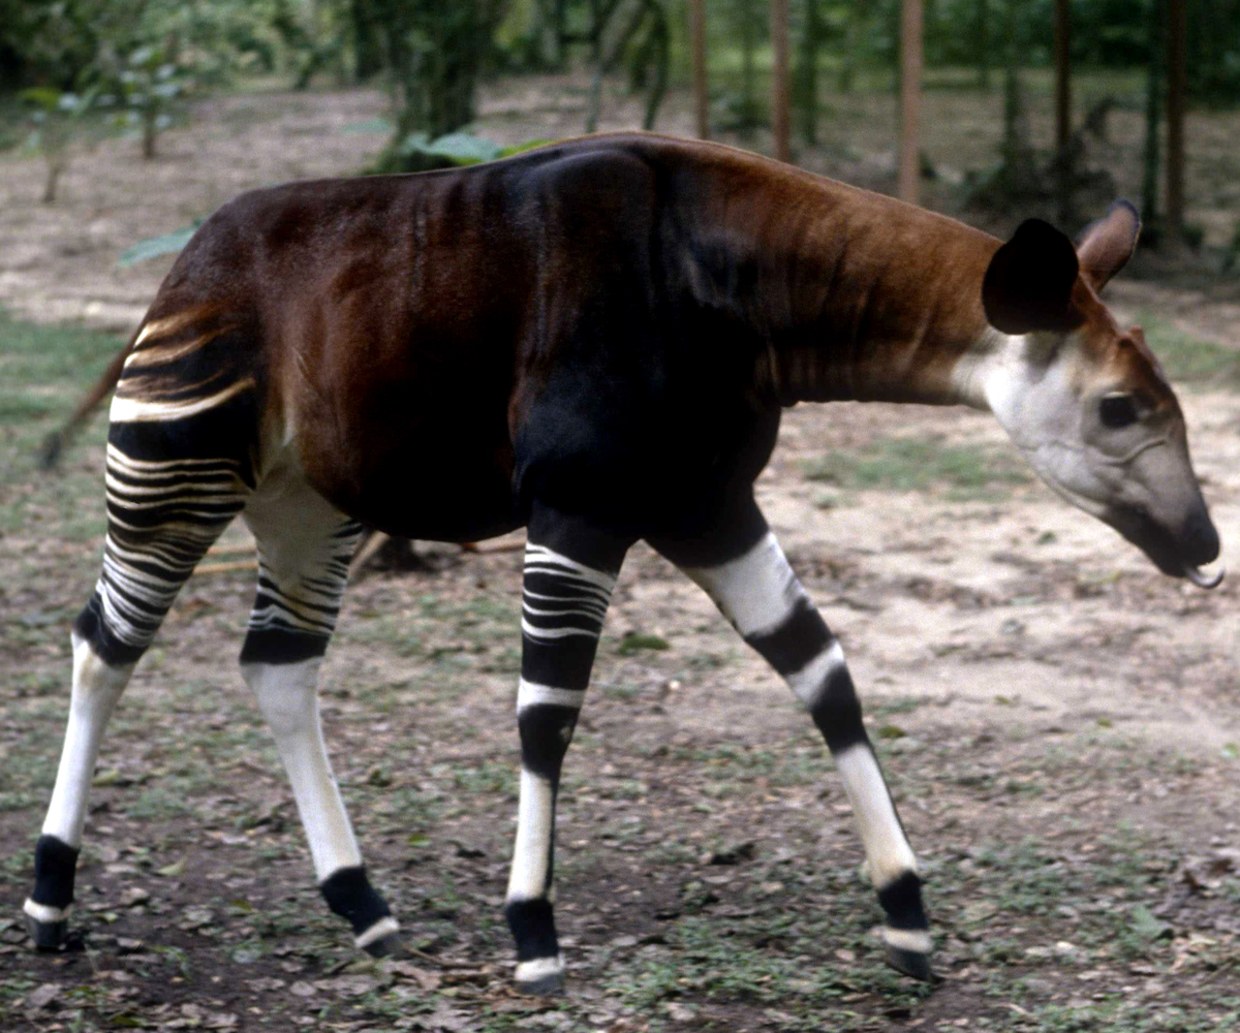 Zebra-like giraffe relative rediscovered